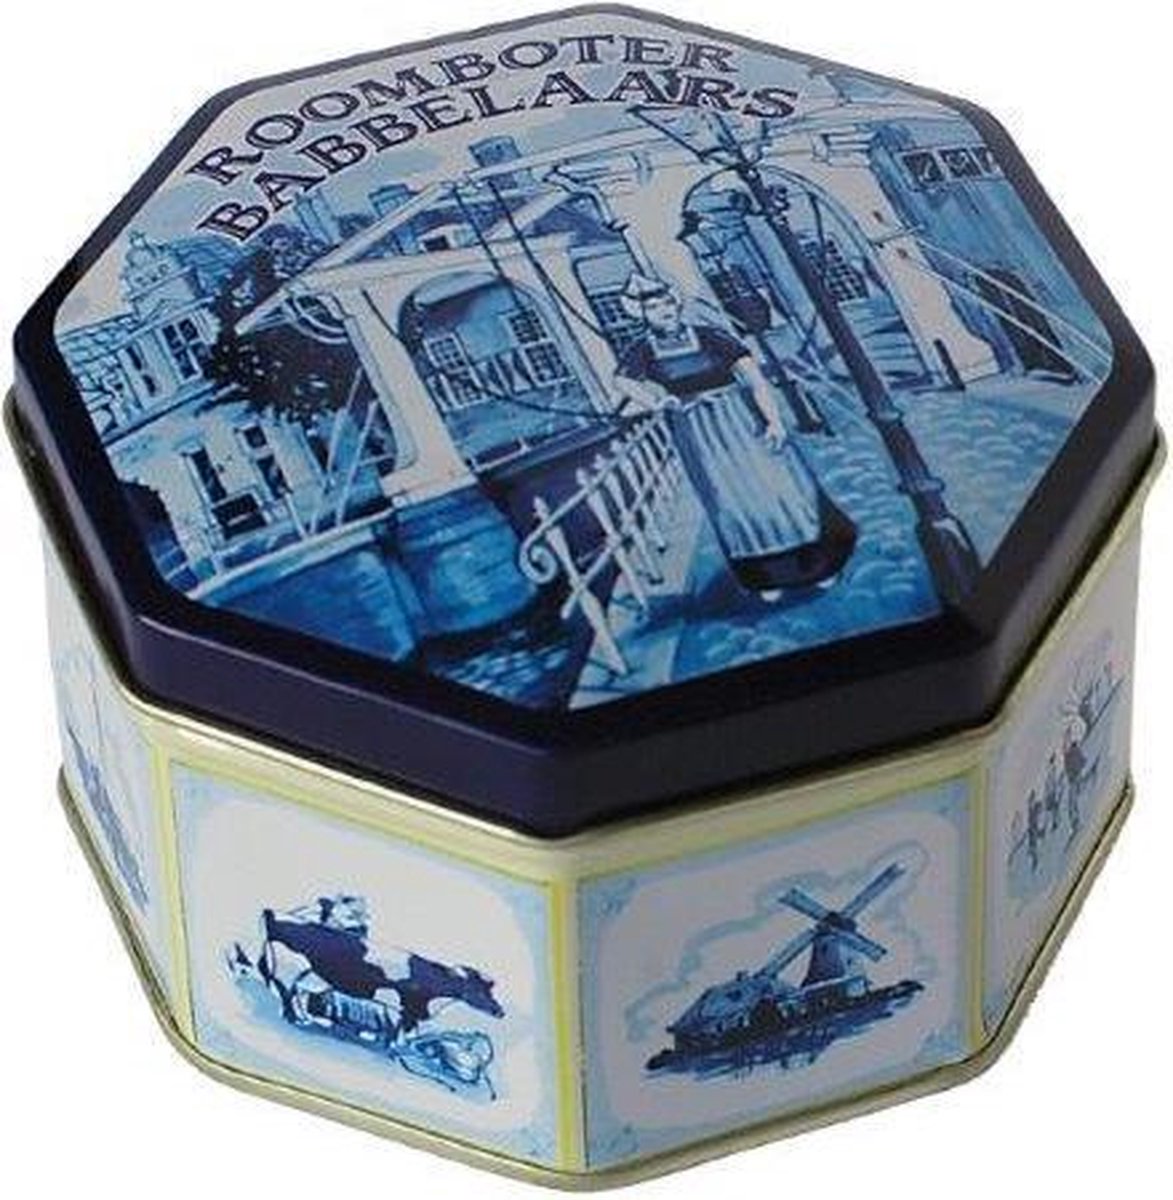 Babbelaars au beurre en boîte Blauw de Delft | bol.com